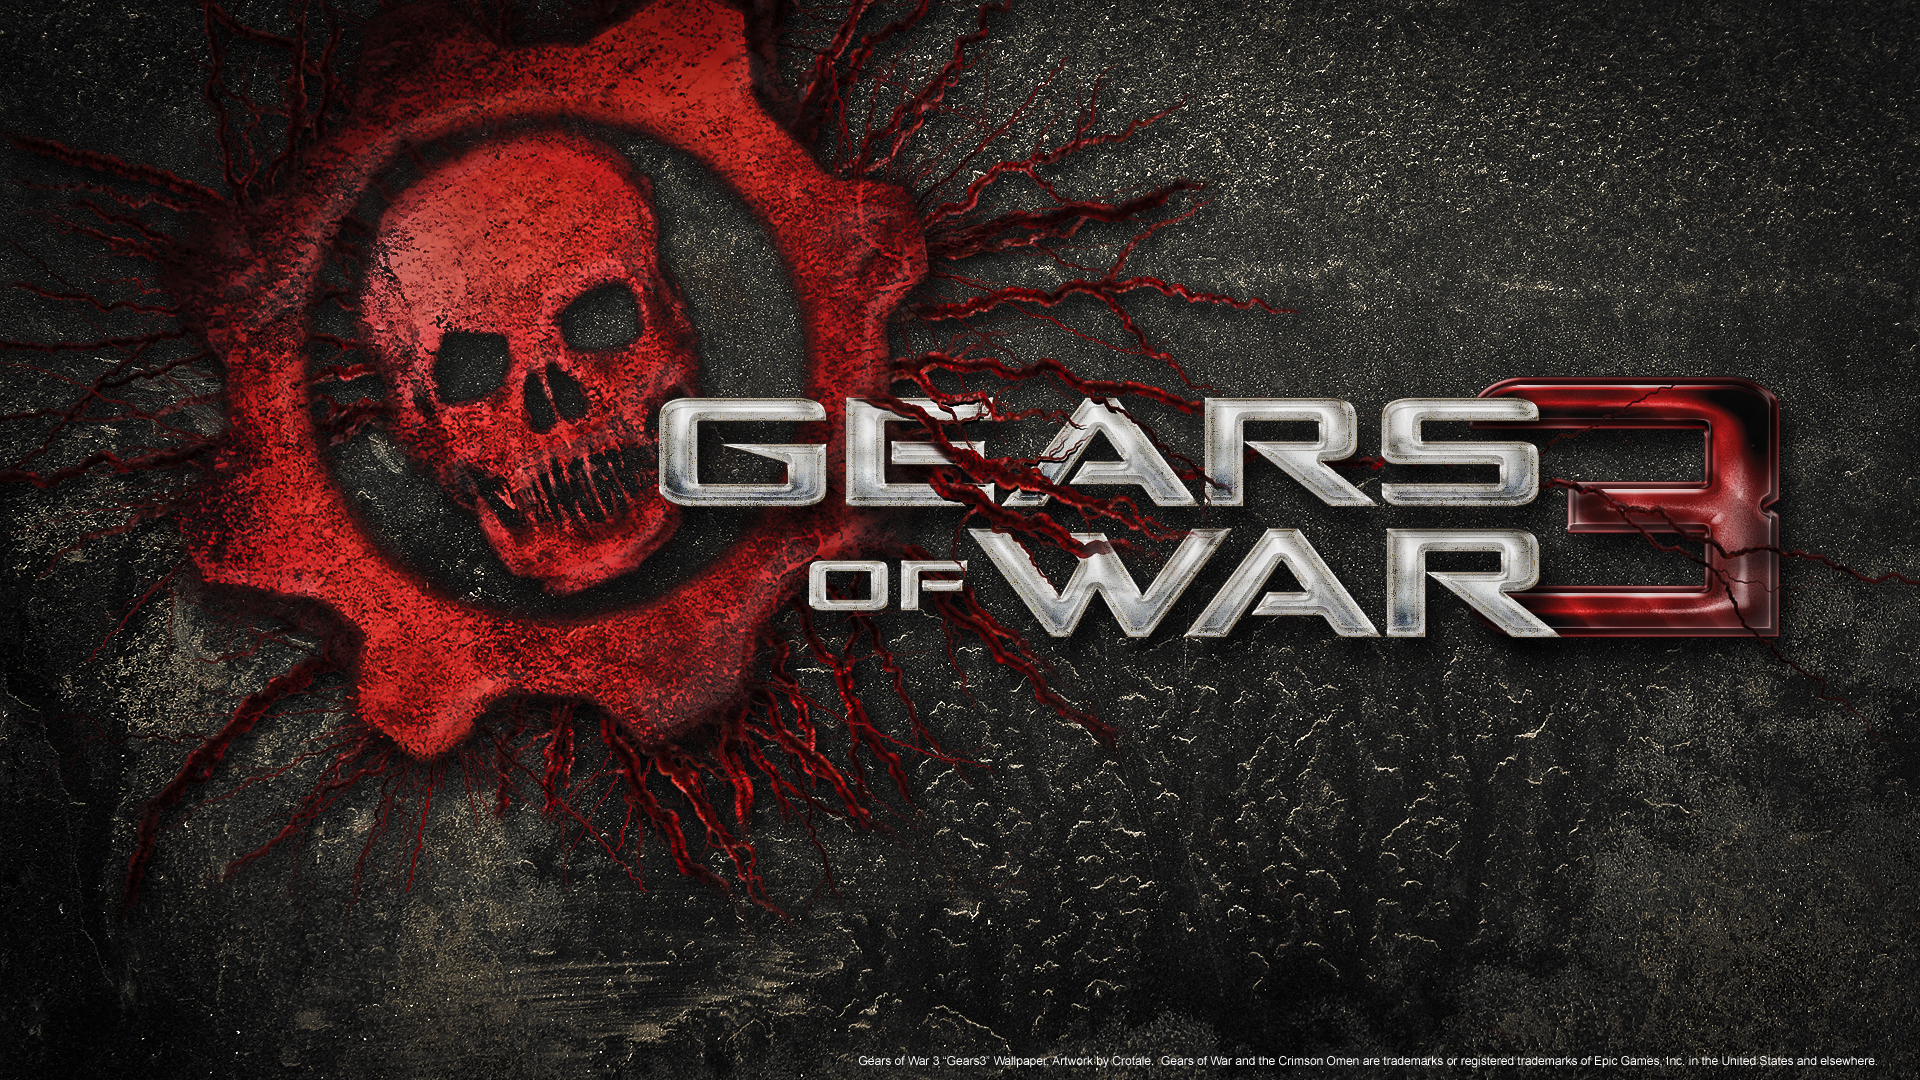 Gears Of War 3 HD wallpapers, Desktop wallpaper - most viewed